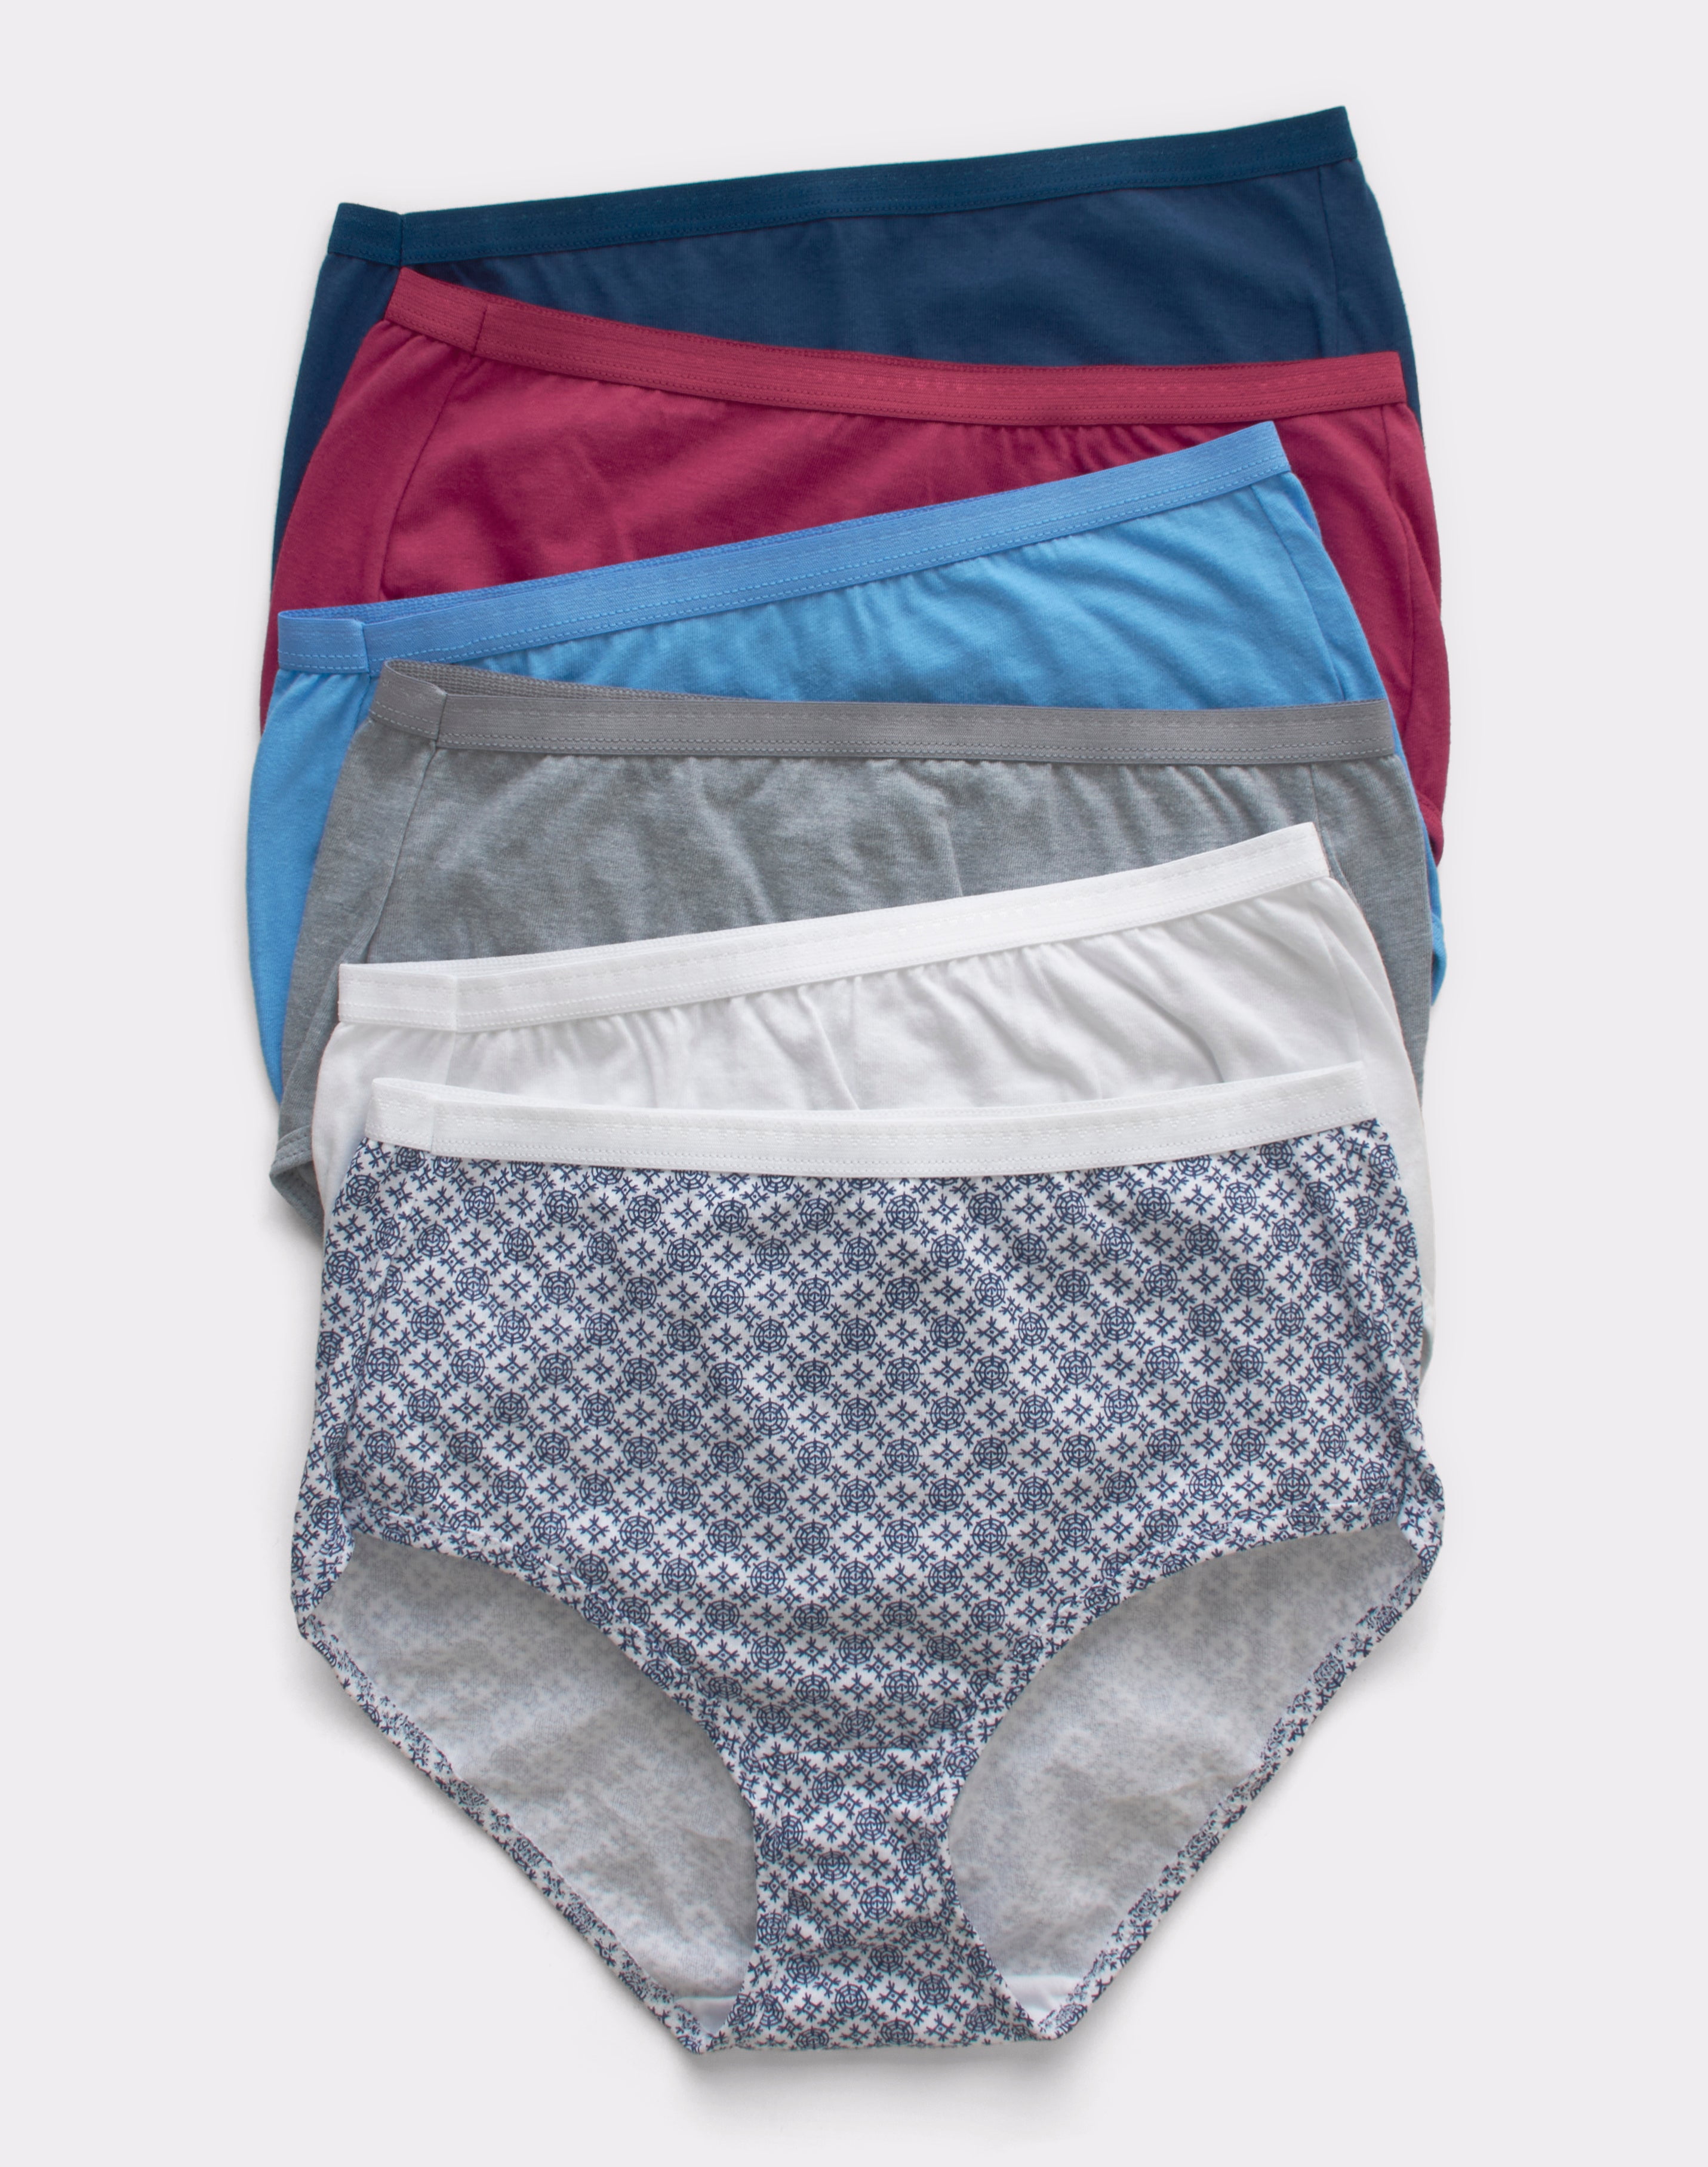 Hanes Ultimate Women's Breathable Cotton Brief Underwear, 6-Pack Swiss  Blue/White/Concrete Heather/Fresh Berry/Navy Eclipse/ Crochet Boho Print 7